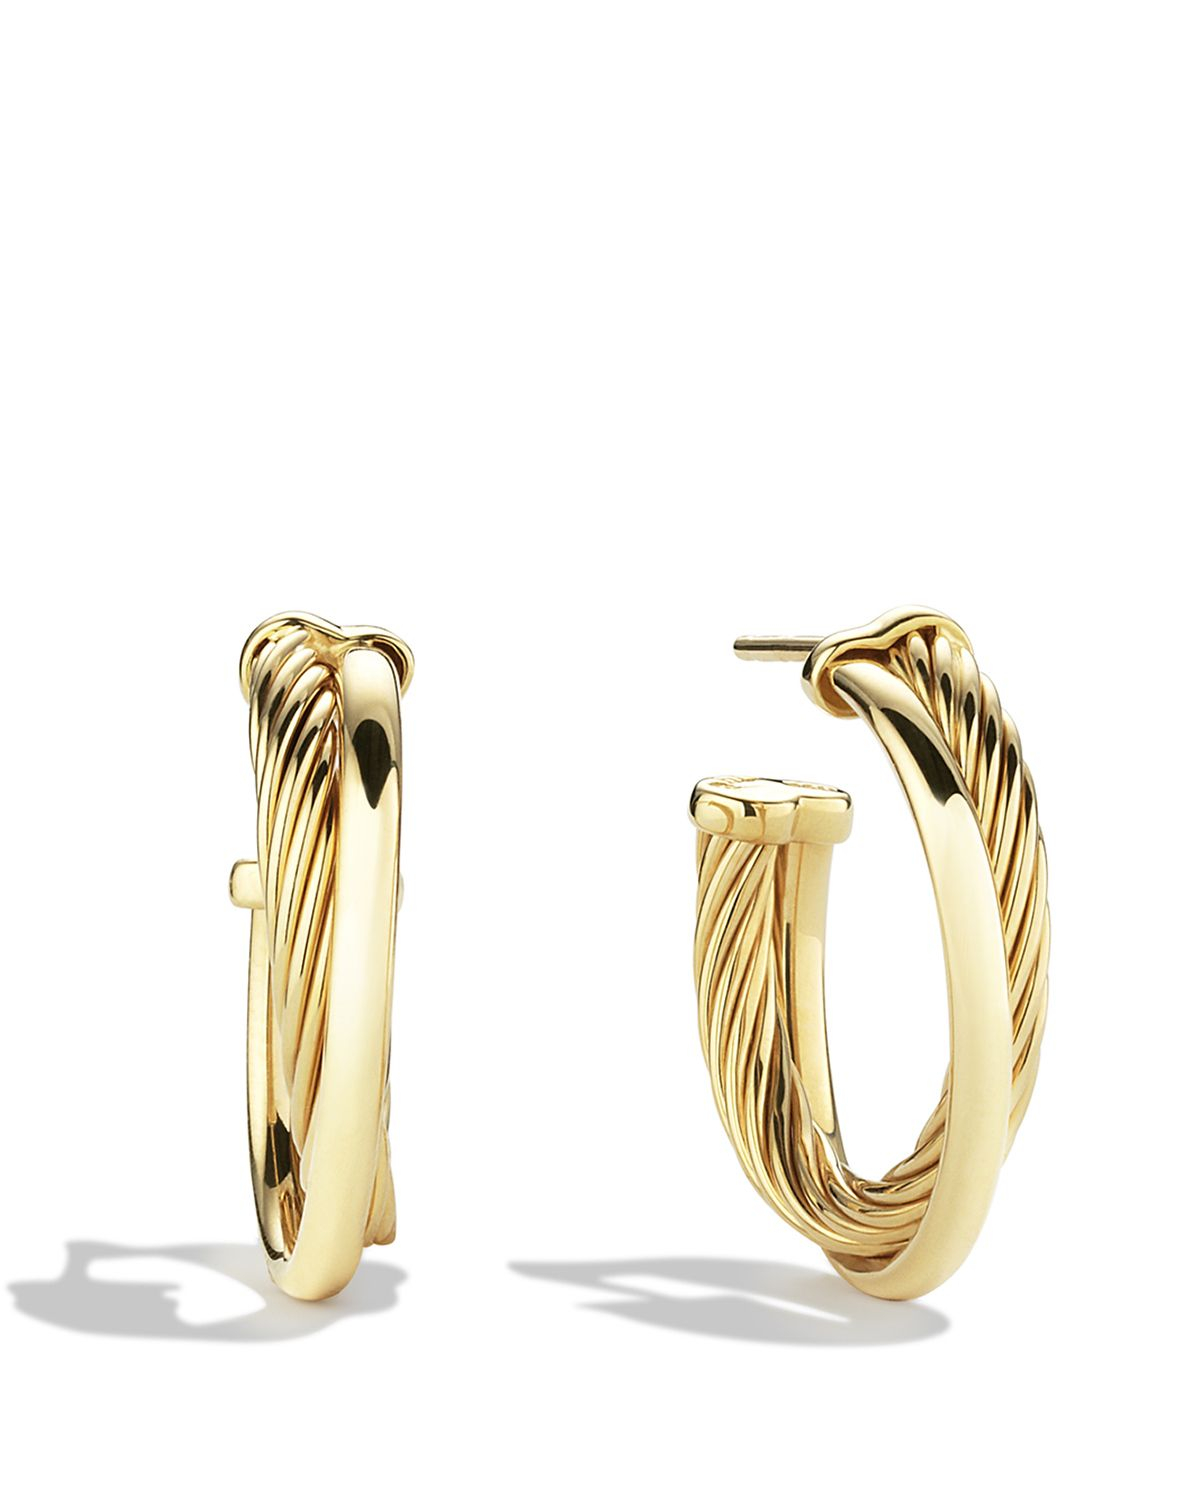 Lyst - David yurman Crossover Small Hoop Earrings In Gold in Yellow